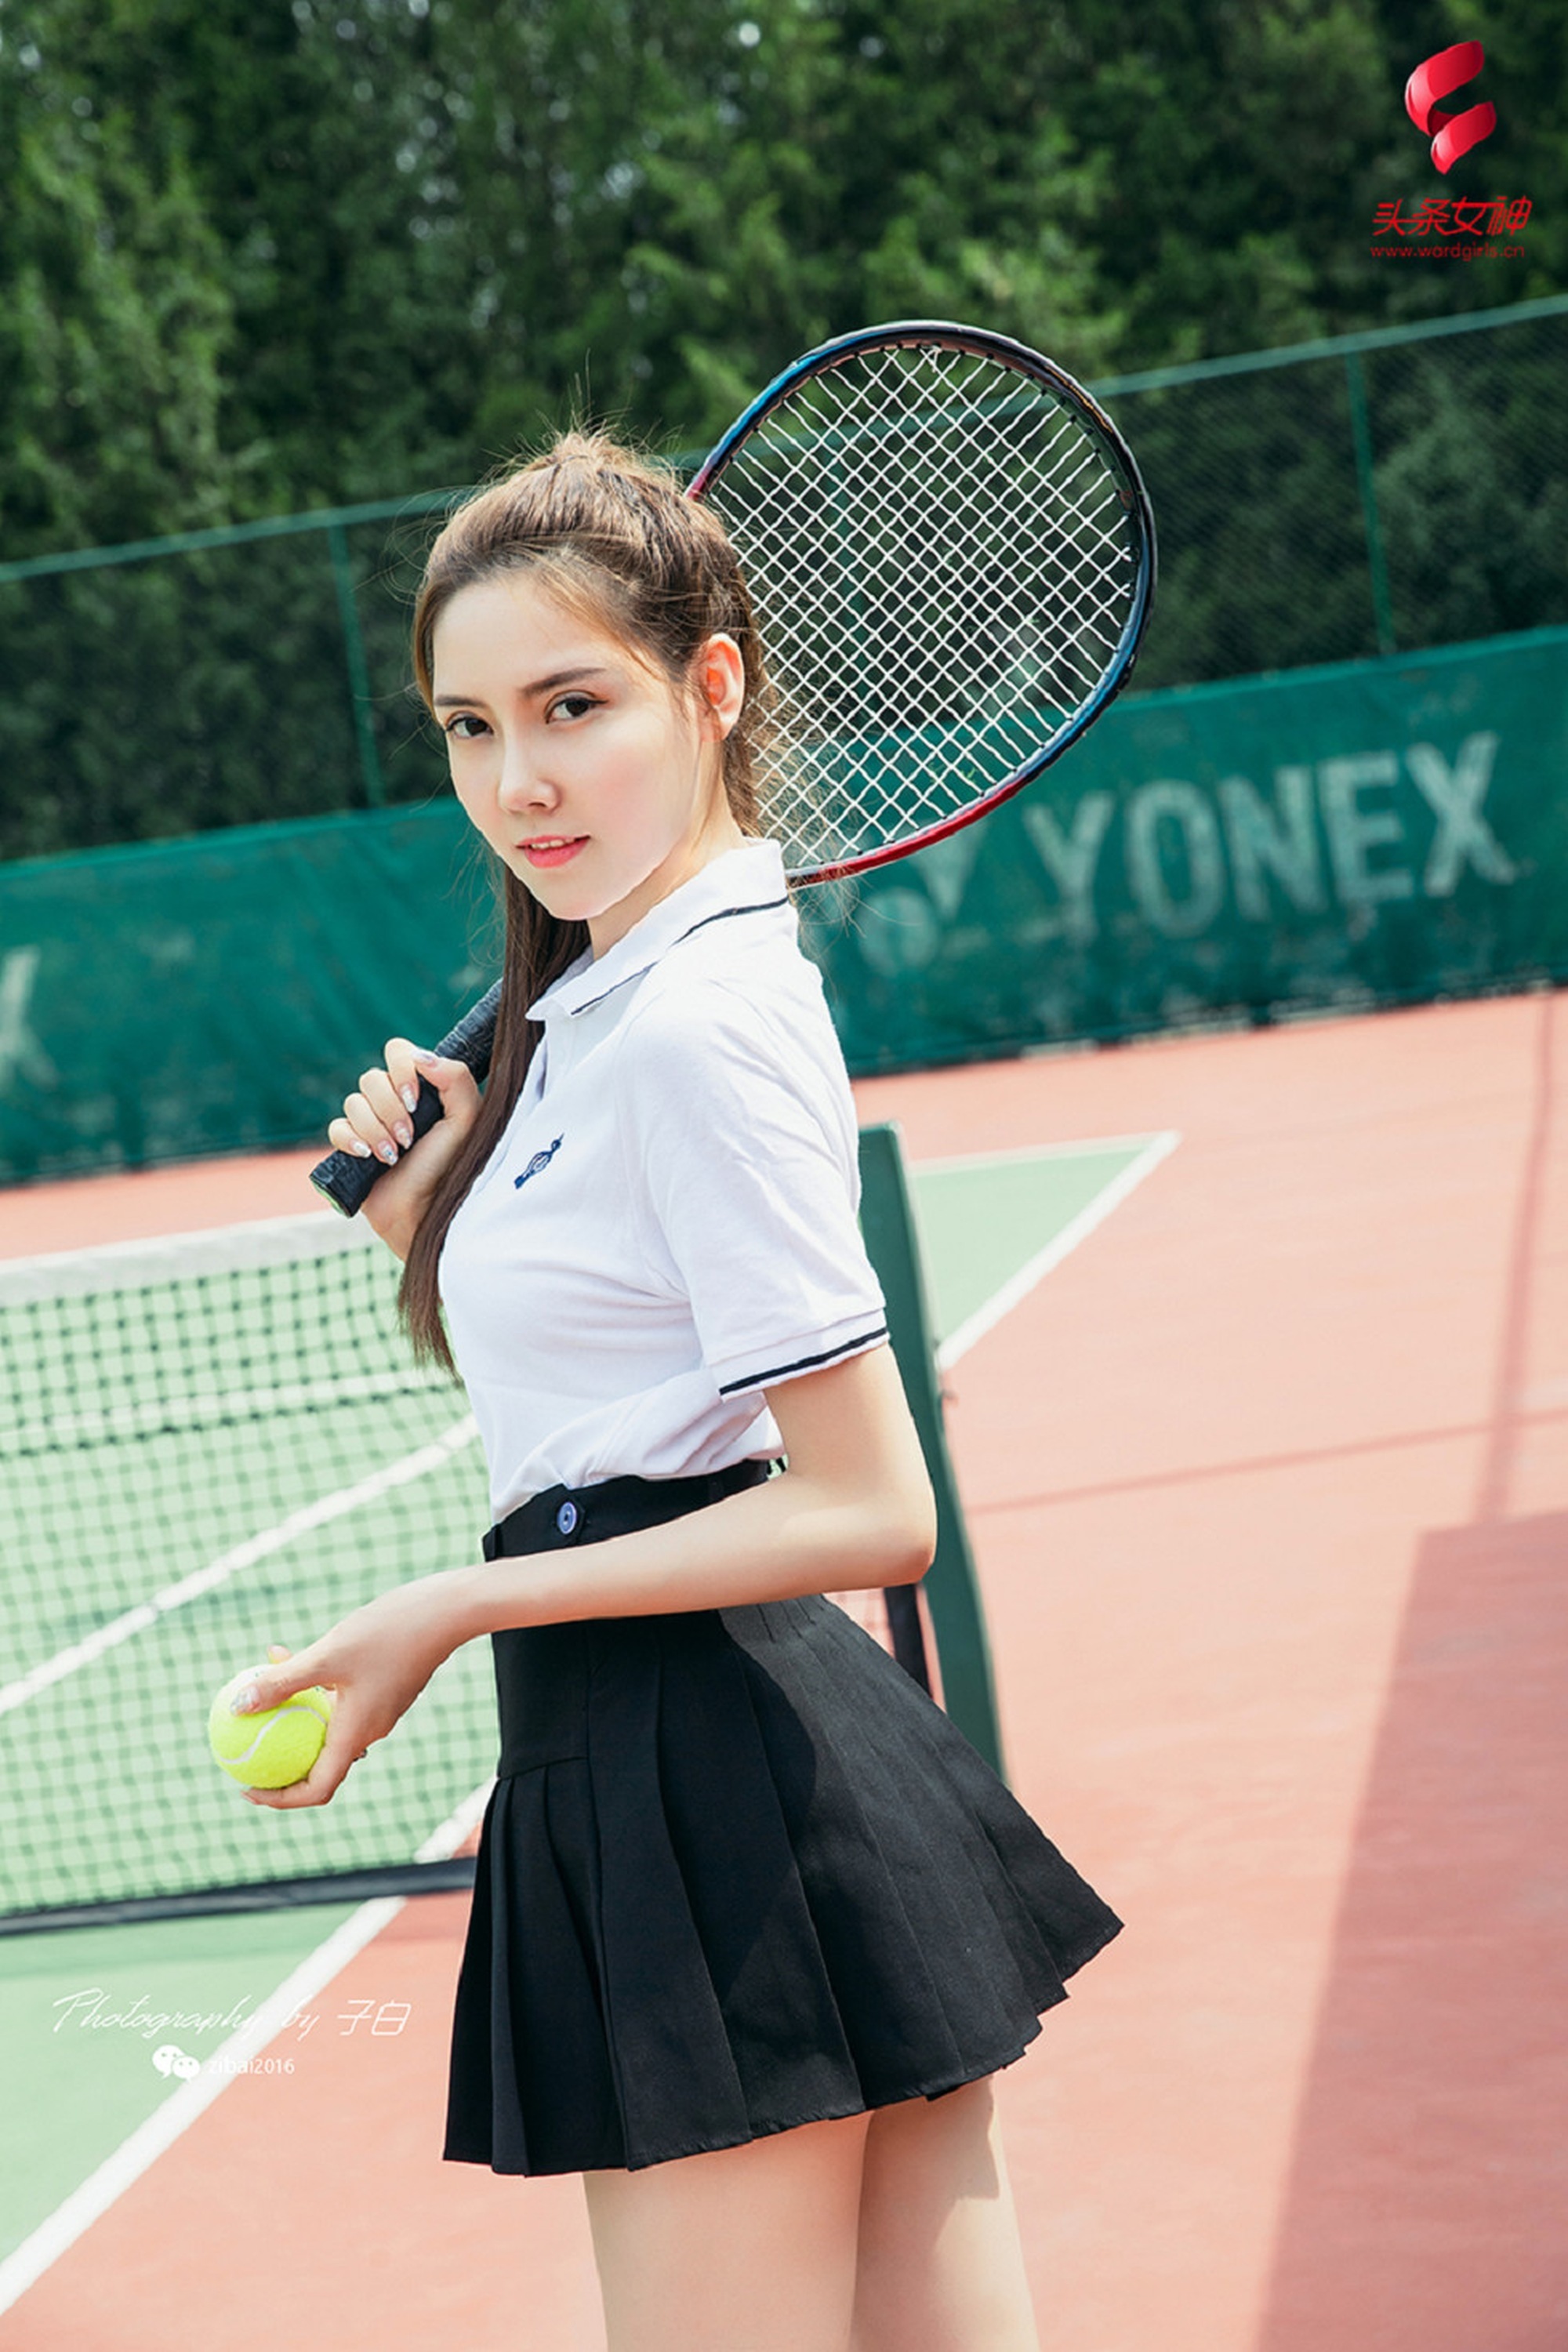 Toutiao headline goddess July 13, 2019 Sharon I'm a beautiful girl in tennis